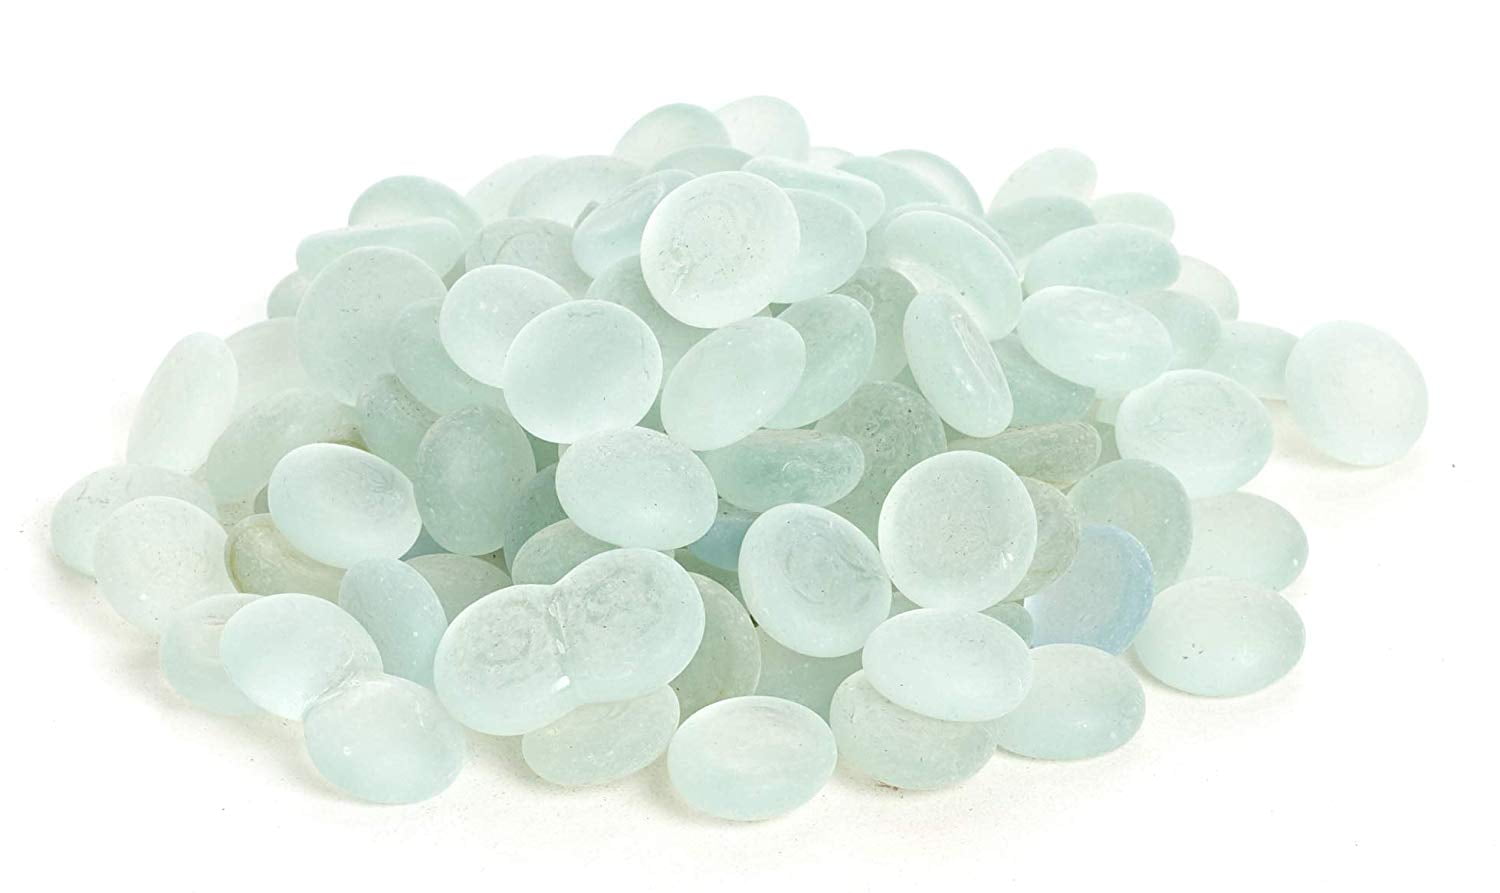 Mduoduo 200 Pcs Plastic Gems Ice Grains Colorful Small Stones